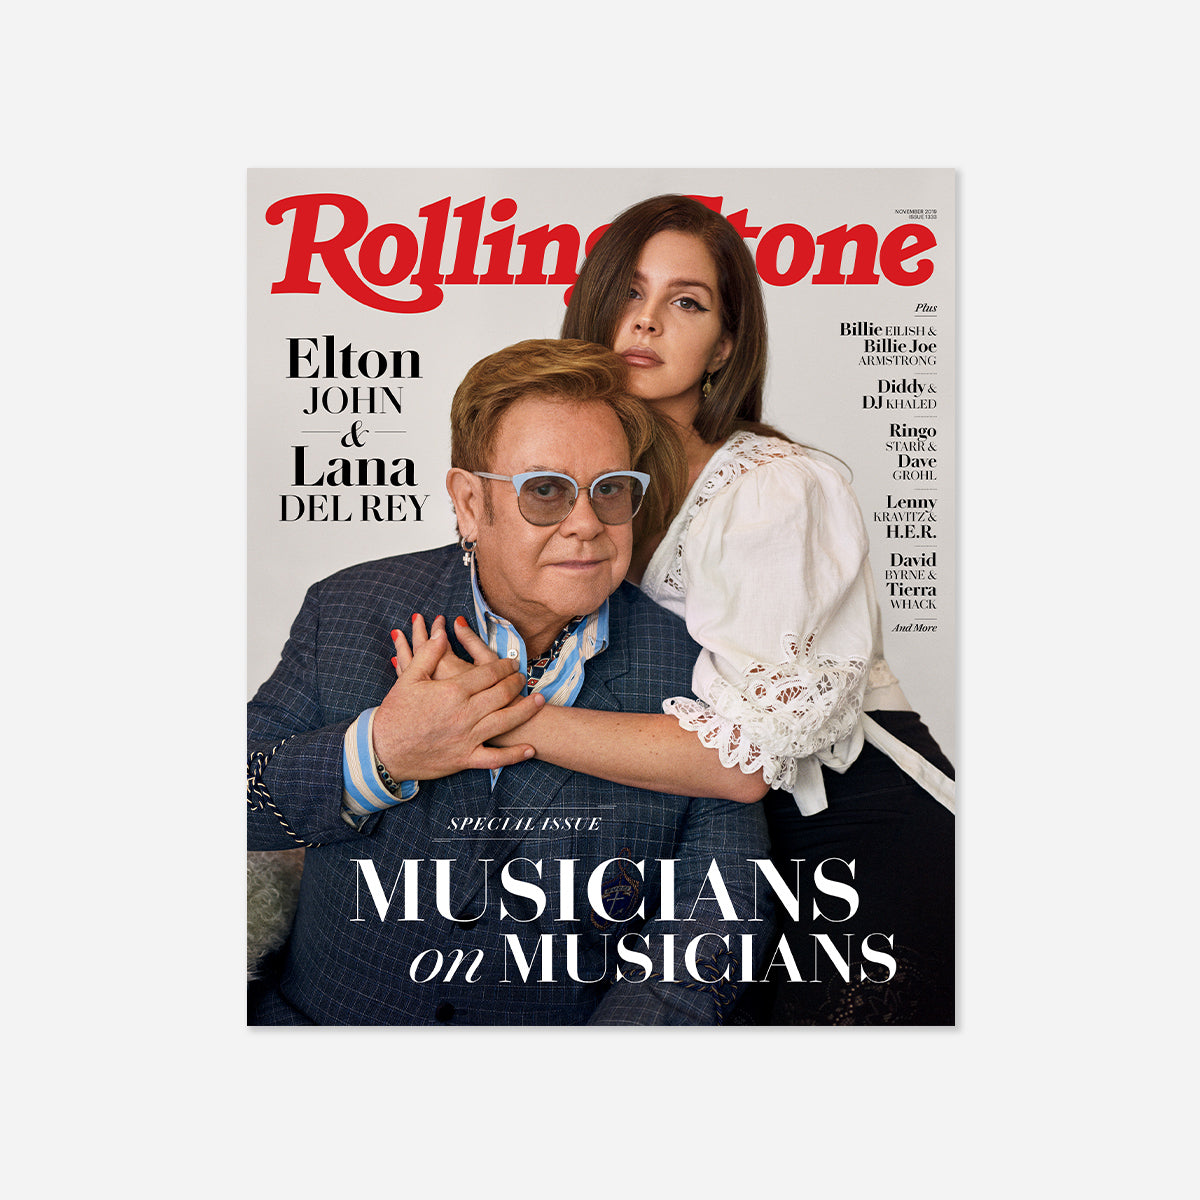 Rolling Stone Magazine November 2019 Featuring Elton John and Lana Del Rey (Issue 1333)